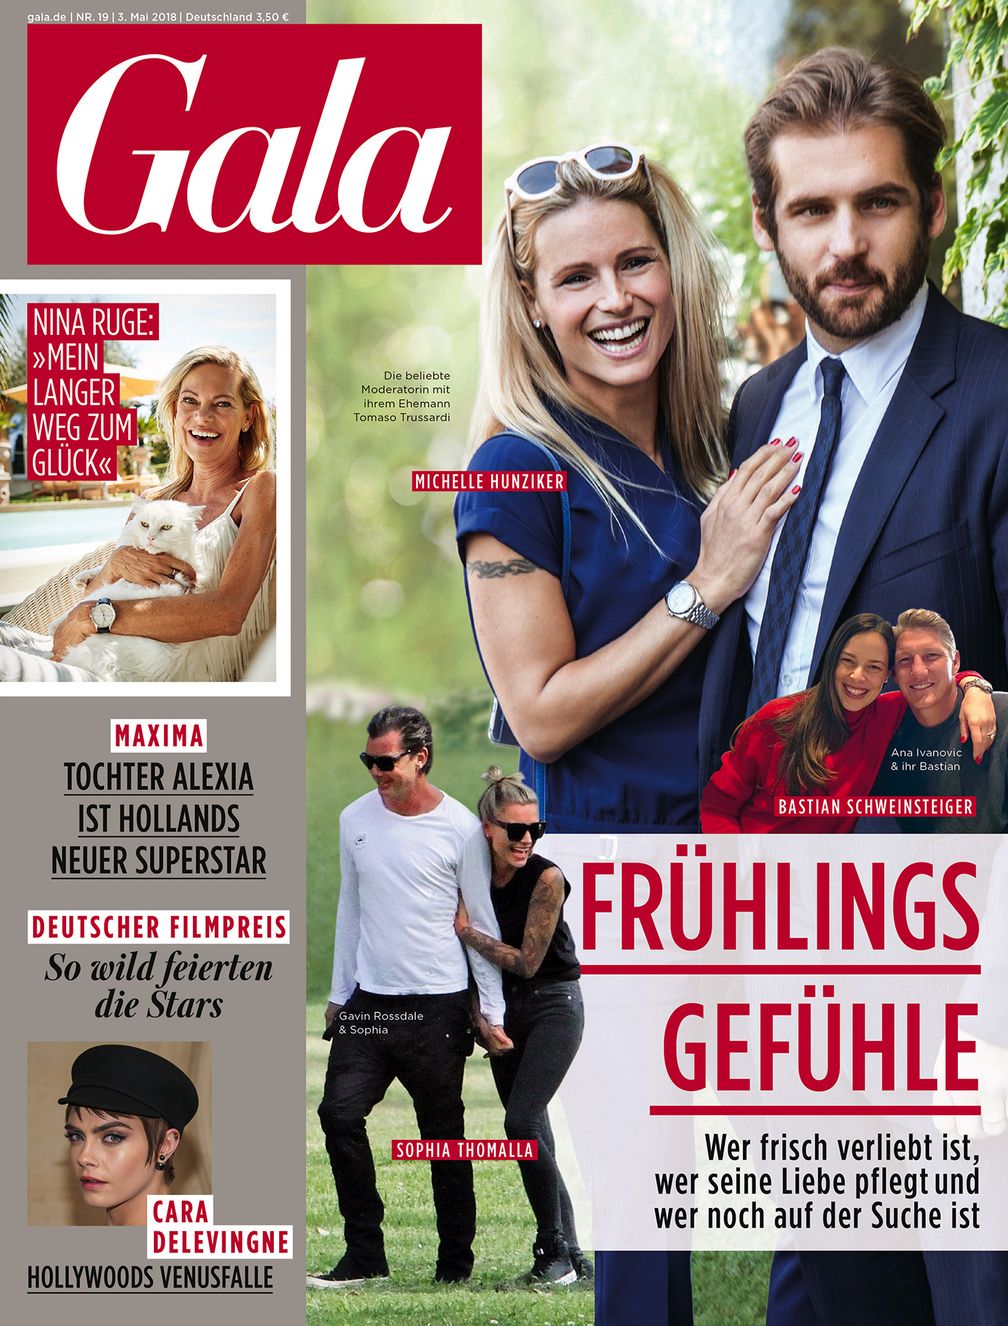 GALA COVER 19/2018, EVT 03.05.2018. Bild: "obs/Gruner+Jahr, Gala"